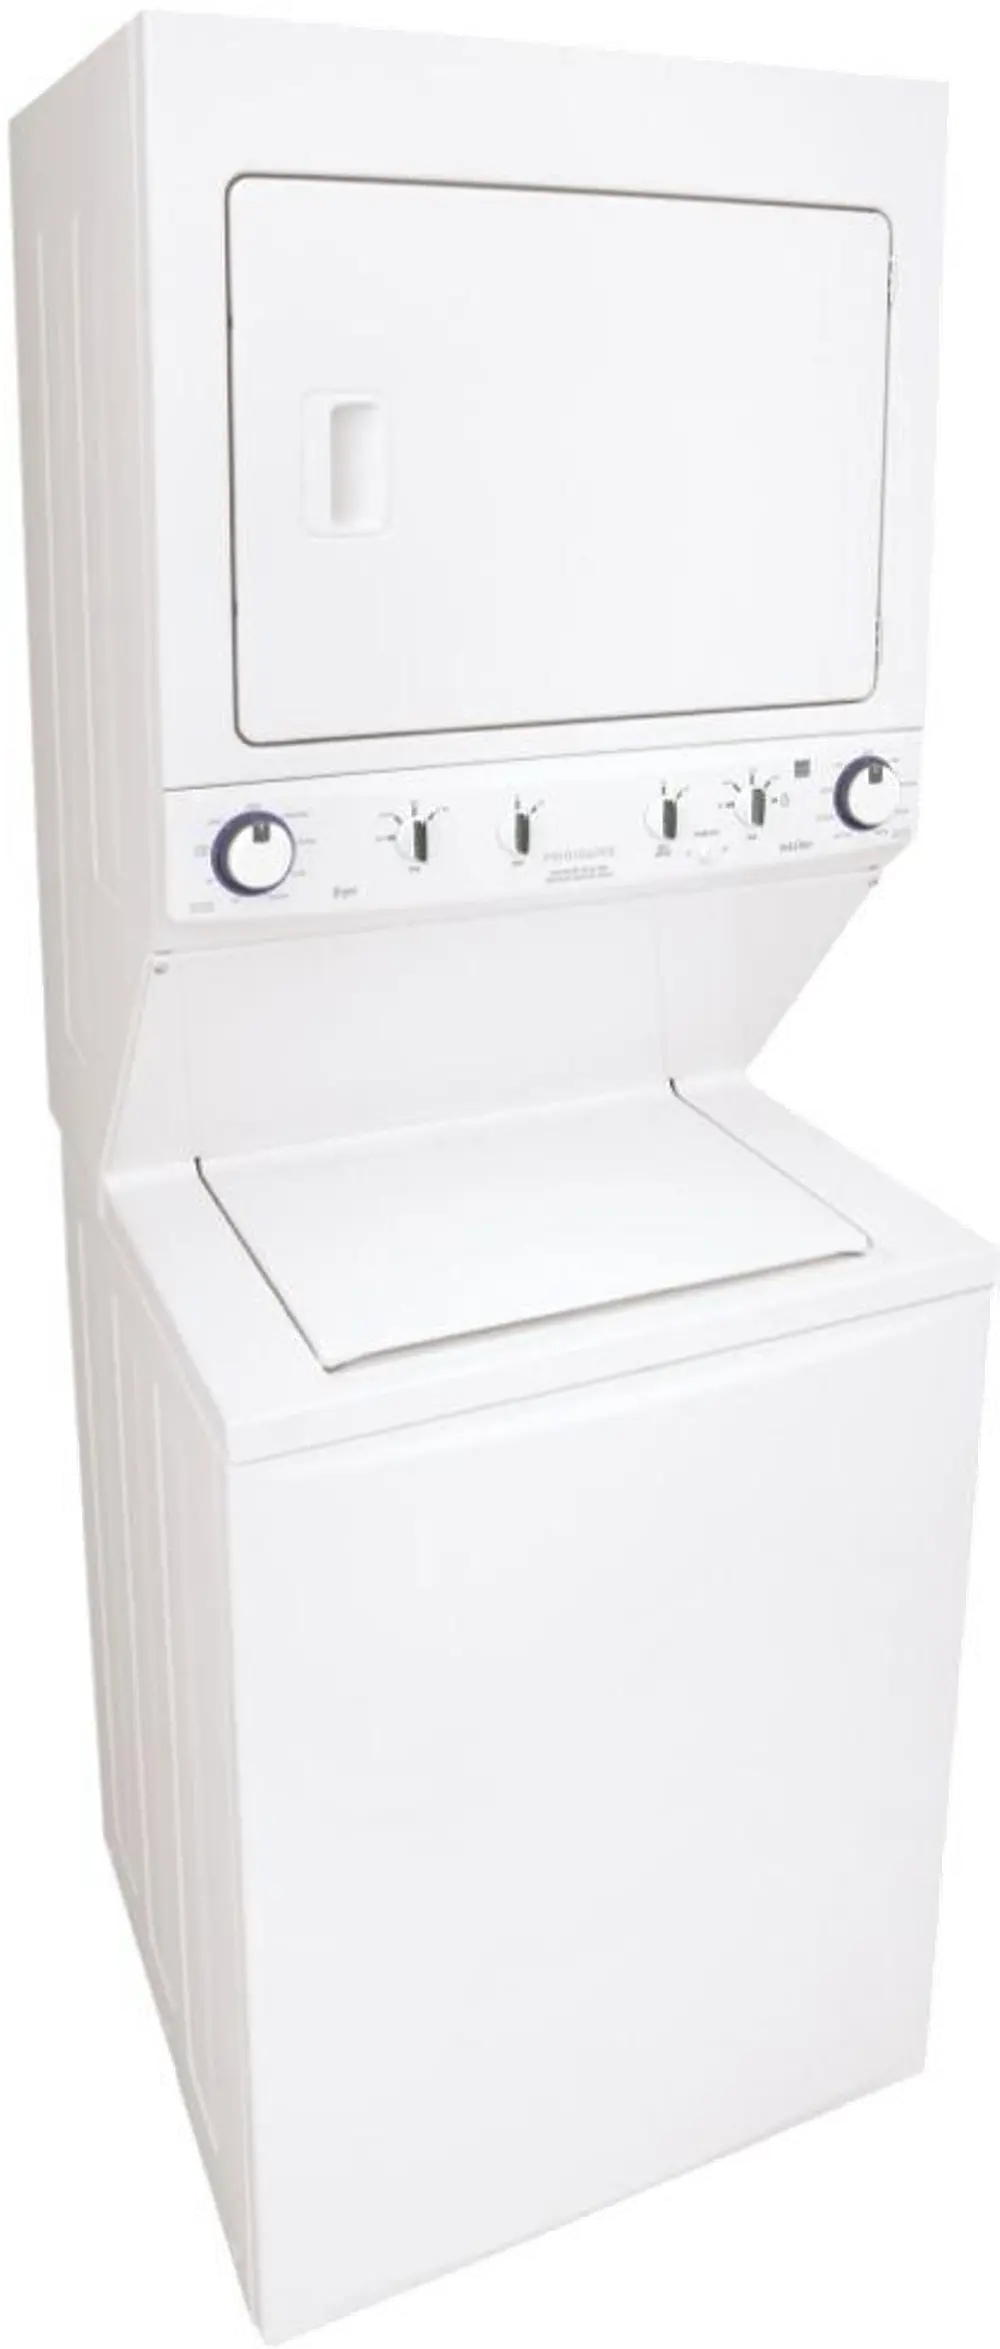 FFLG4033QW Frigidiare Gas Laundry Center - White-1